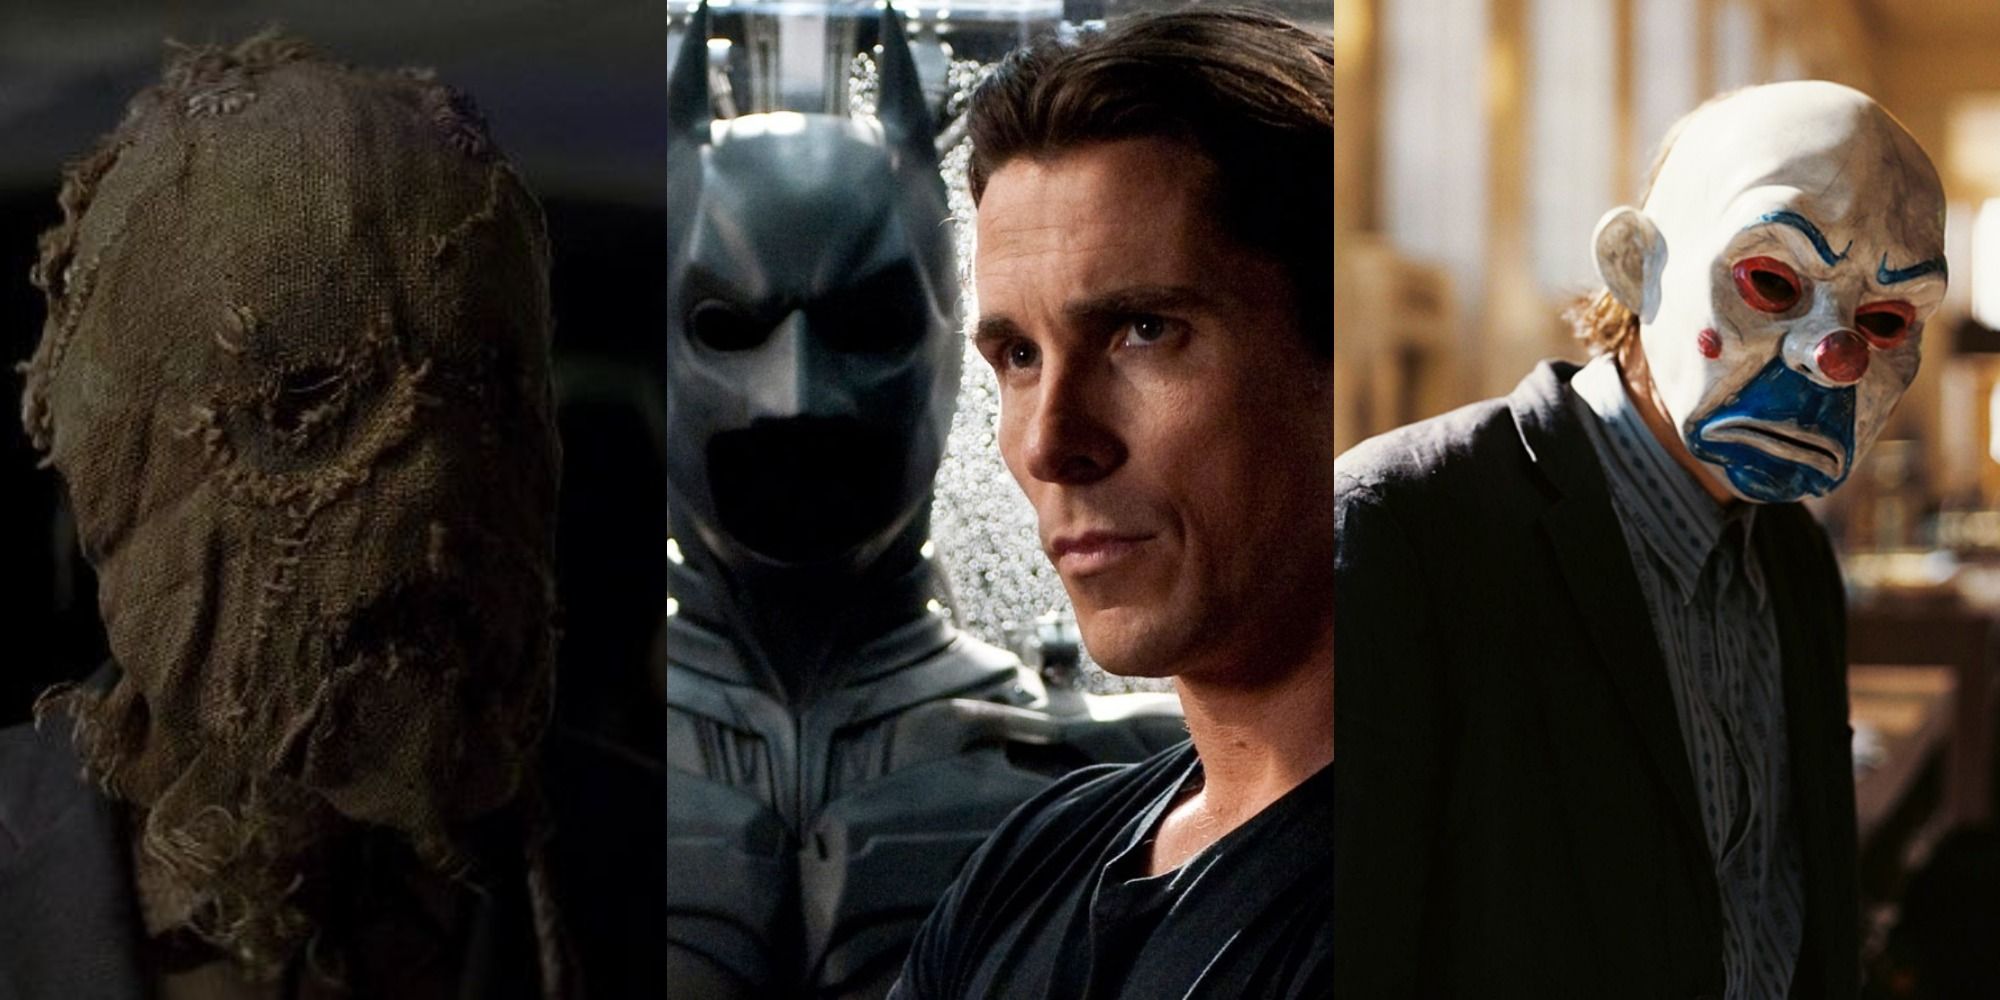 Scarecrow, Bruce Wayne, and Joker in Dark Knight Trilogy